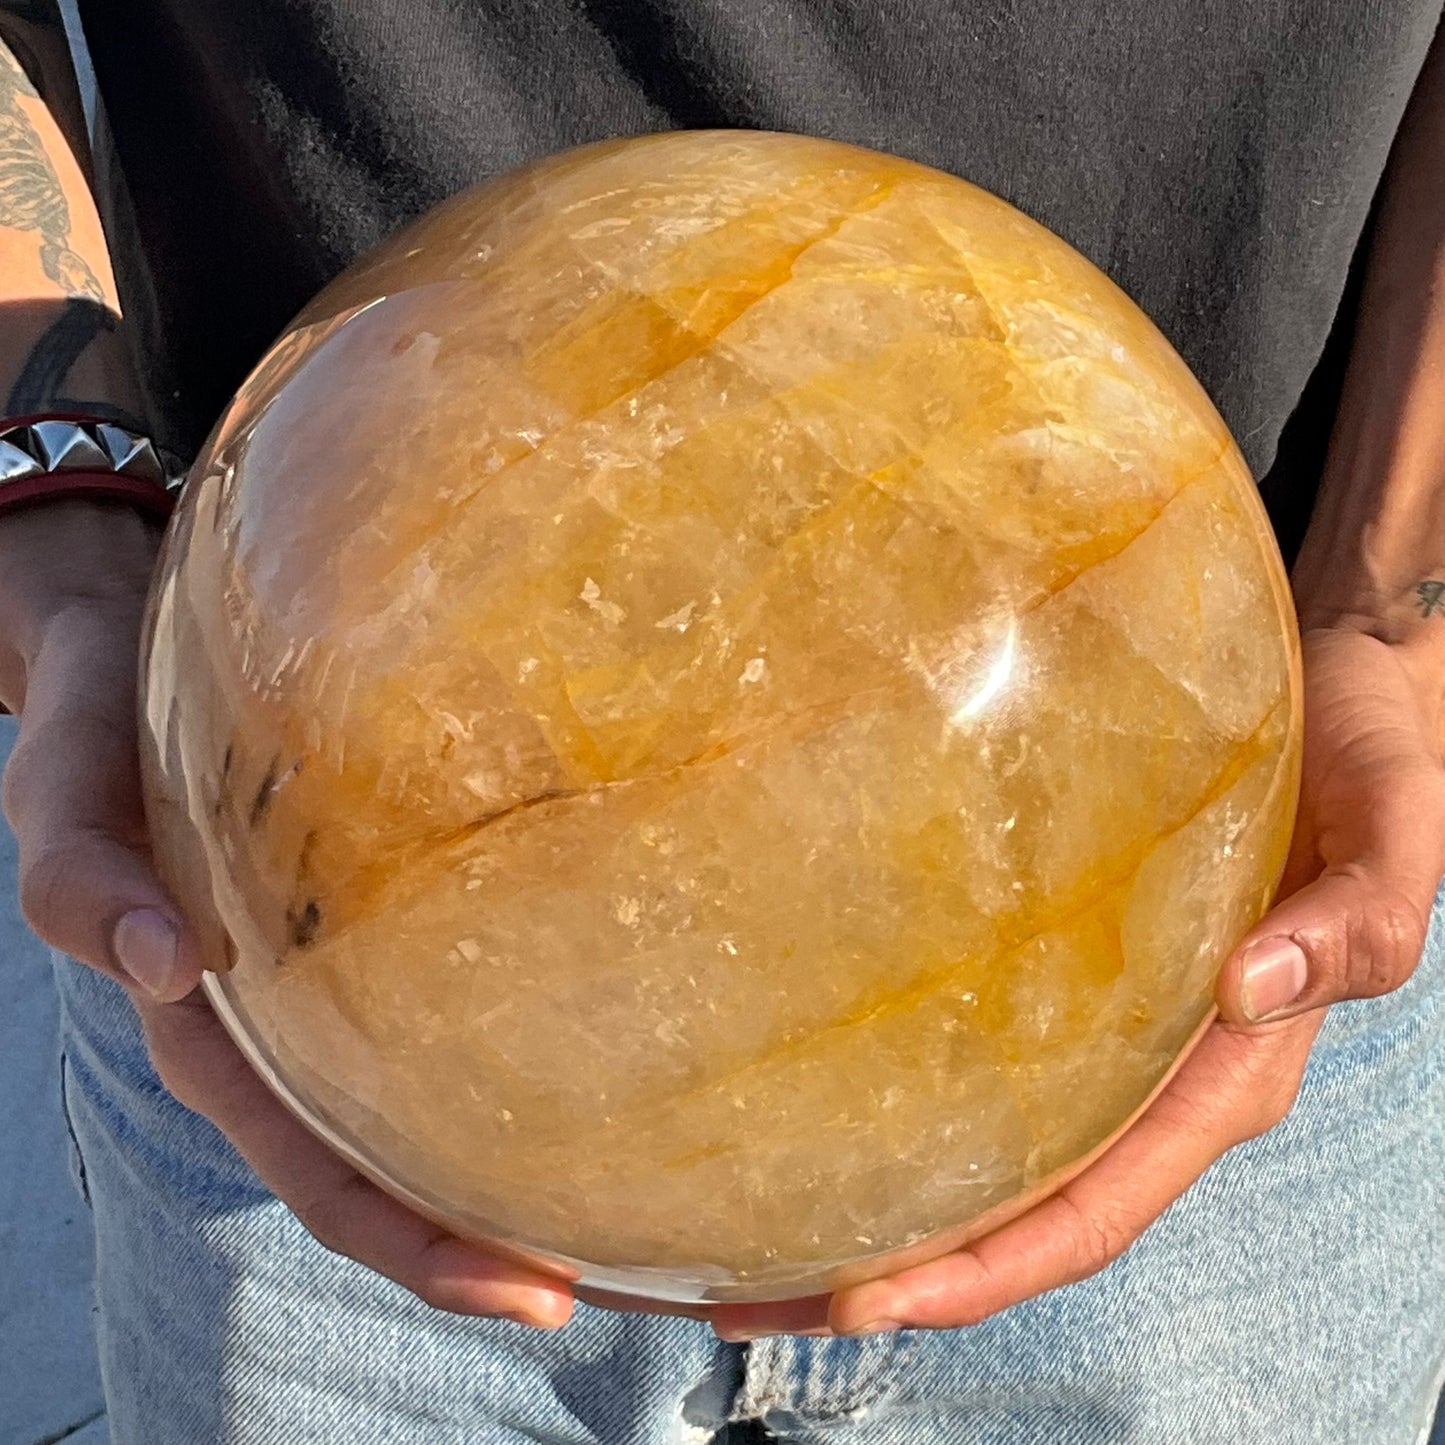 Citrine Yellow Quartz Crystal Sphere